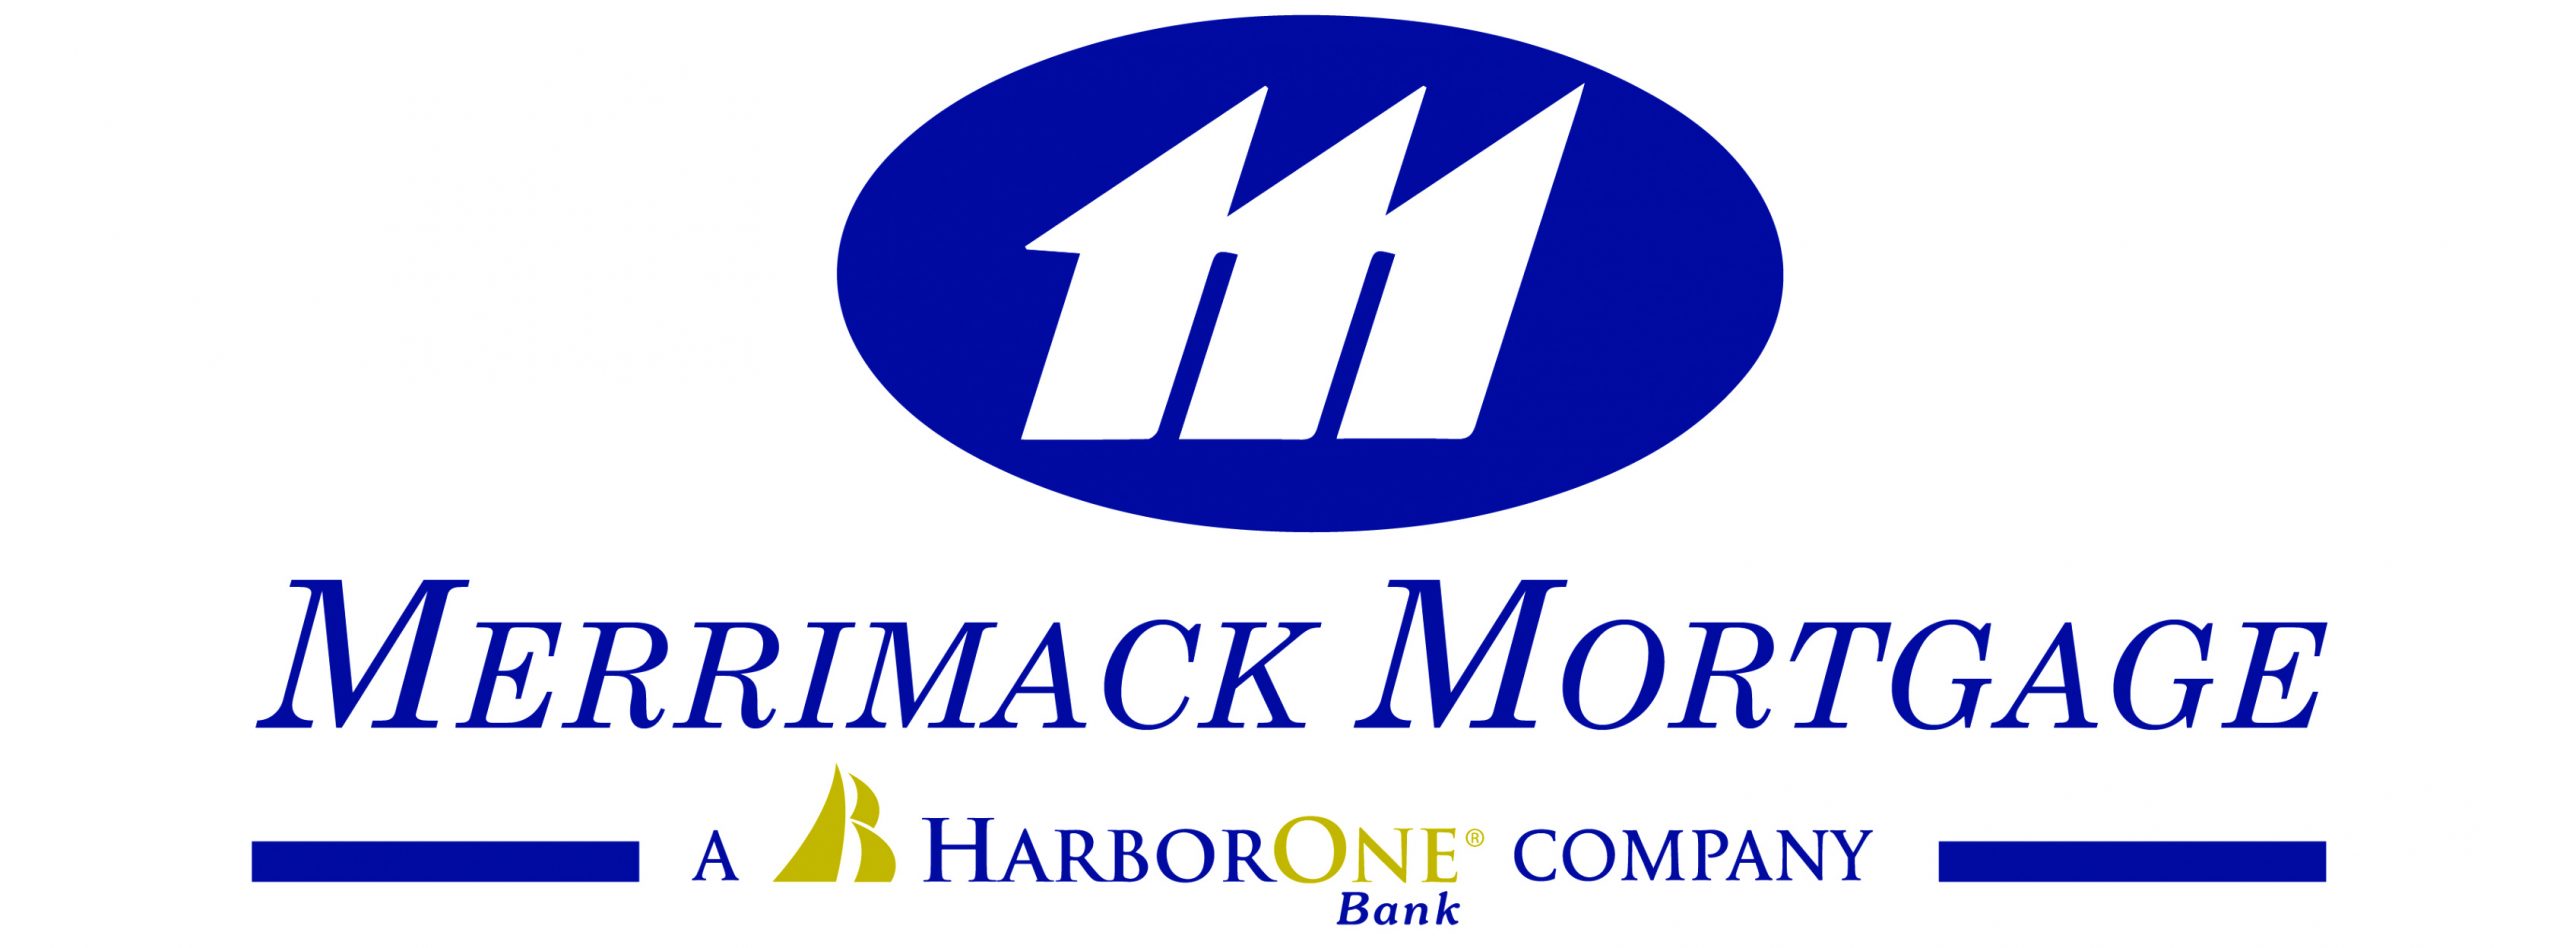 Car Insurance In Merrimack Nh Dans Merrimack Insurance Merrimack Mutual Fire Insurance Co Cancellation